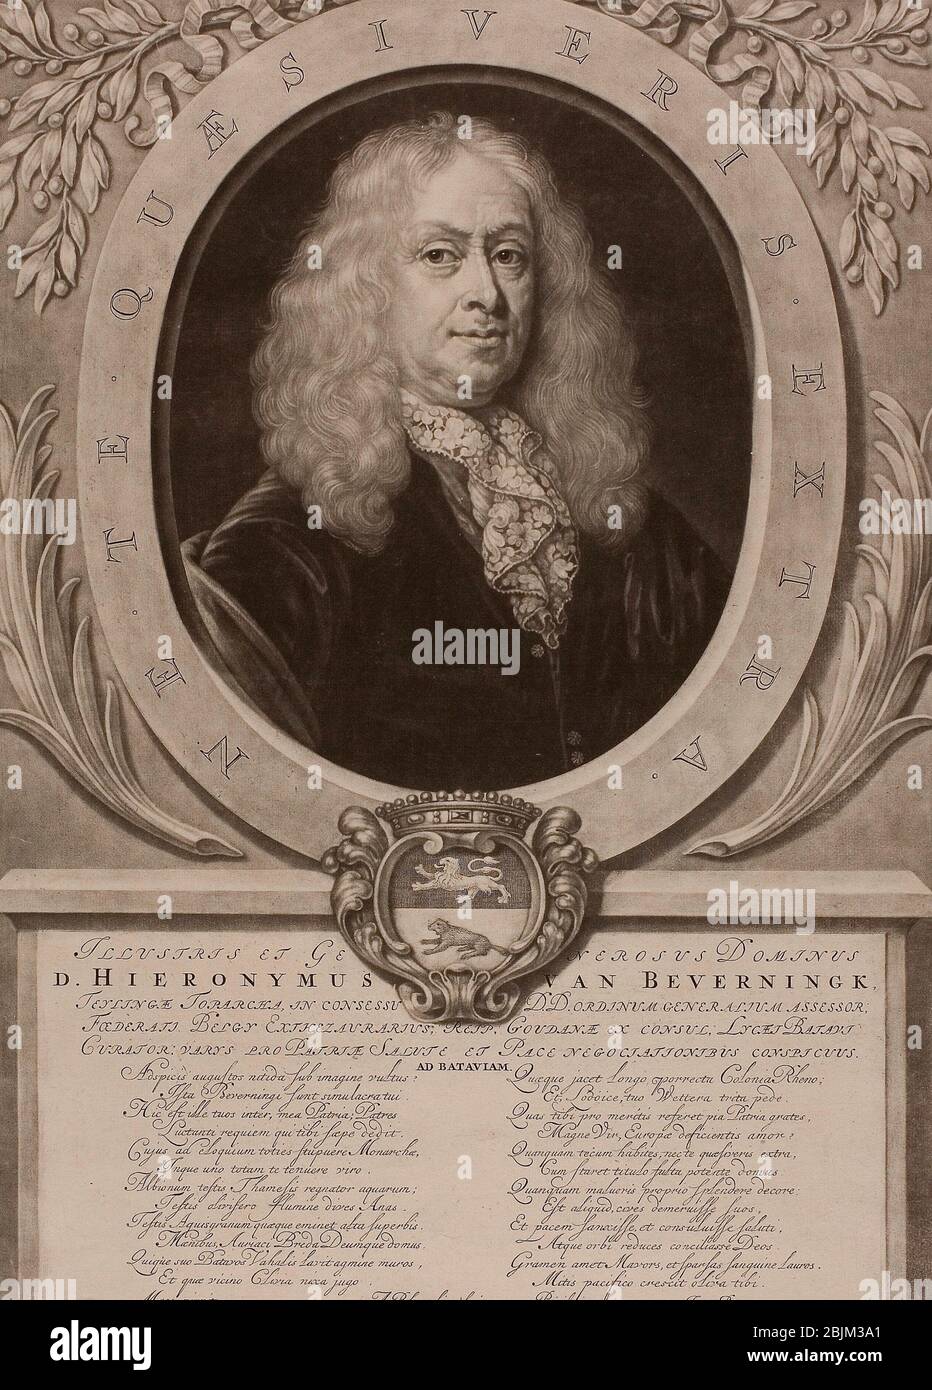 Author: Abraham Blooteling. Portrait of D. Hieronymous van Beverningk - Abraham Blooteling (Dutch, 1640-1690) after Everard Quirijnsz. van der Maes Stock Photo